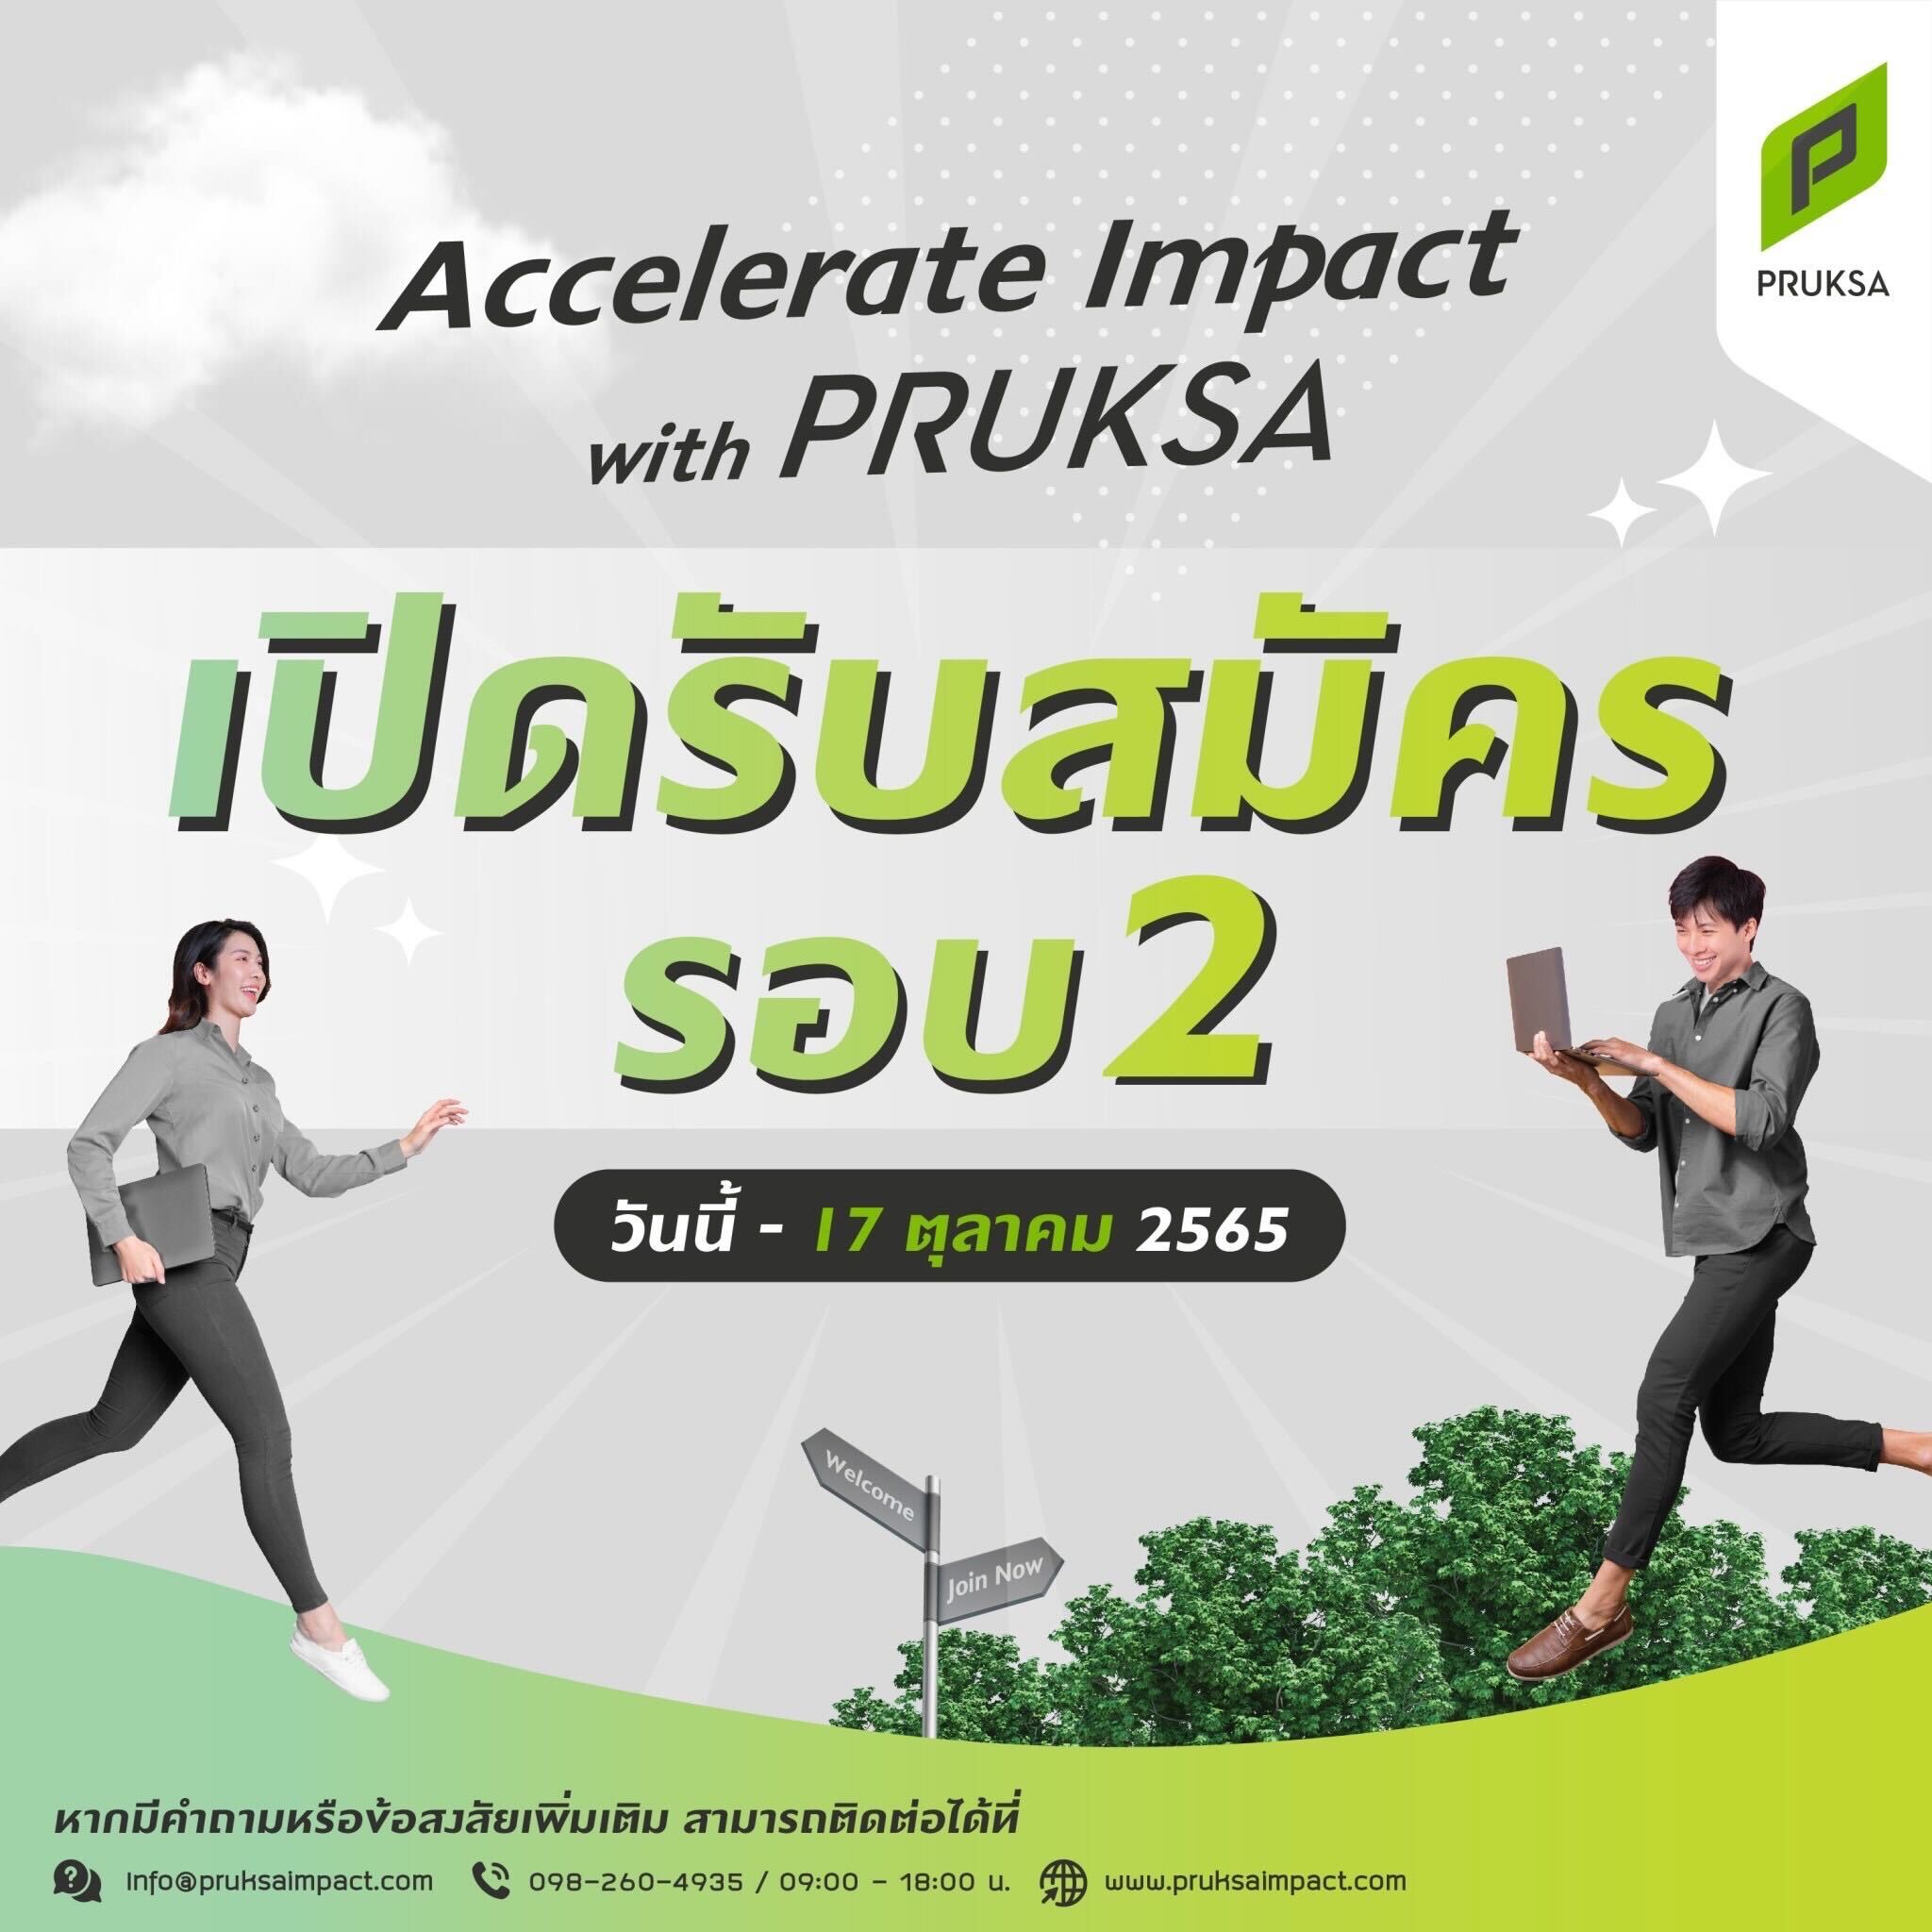 Accelerate Impact with PRUKSA